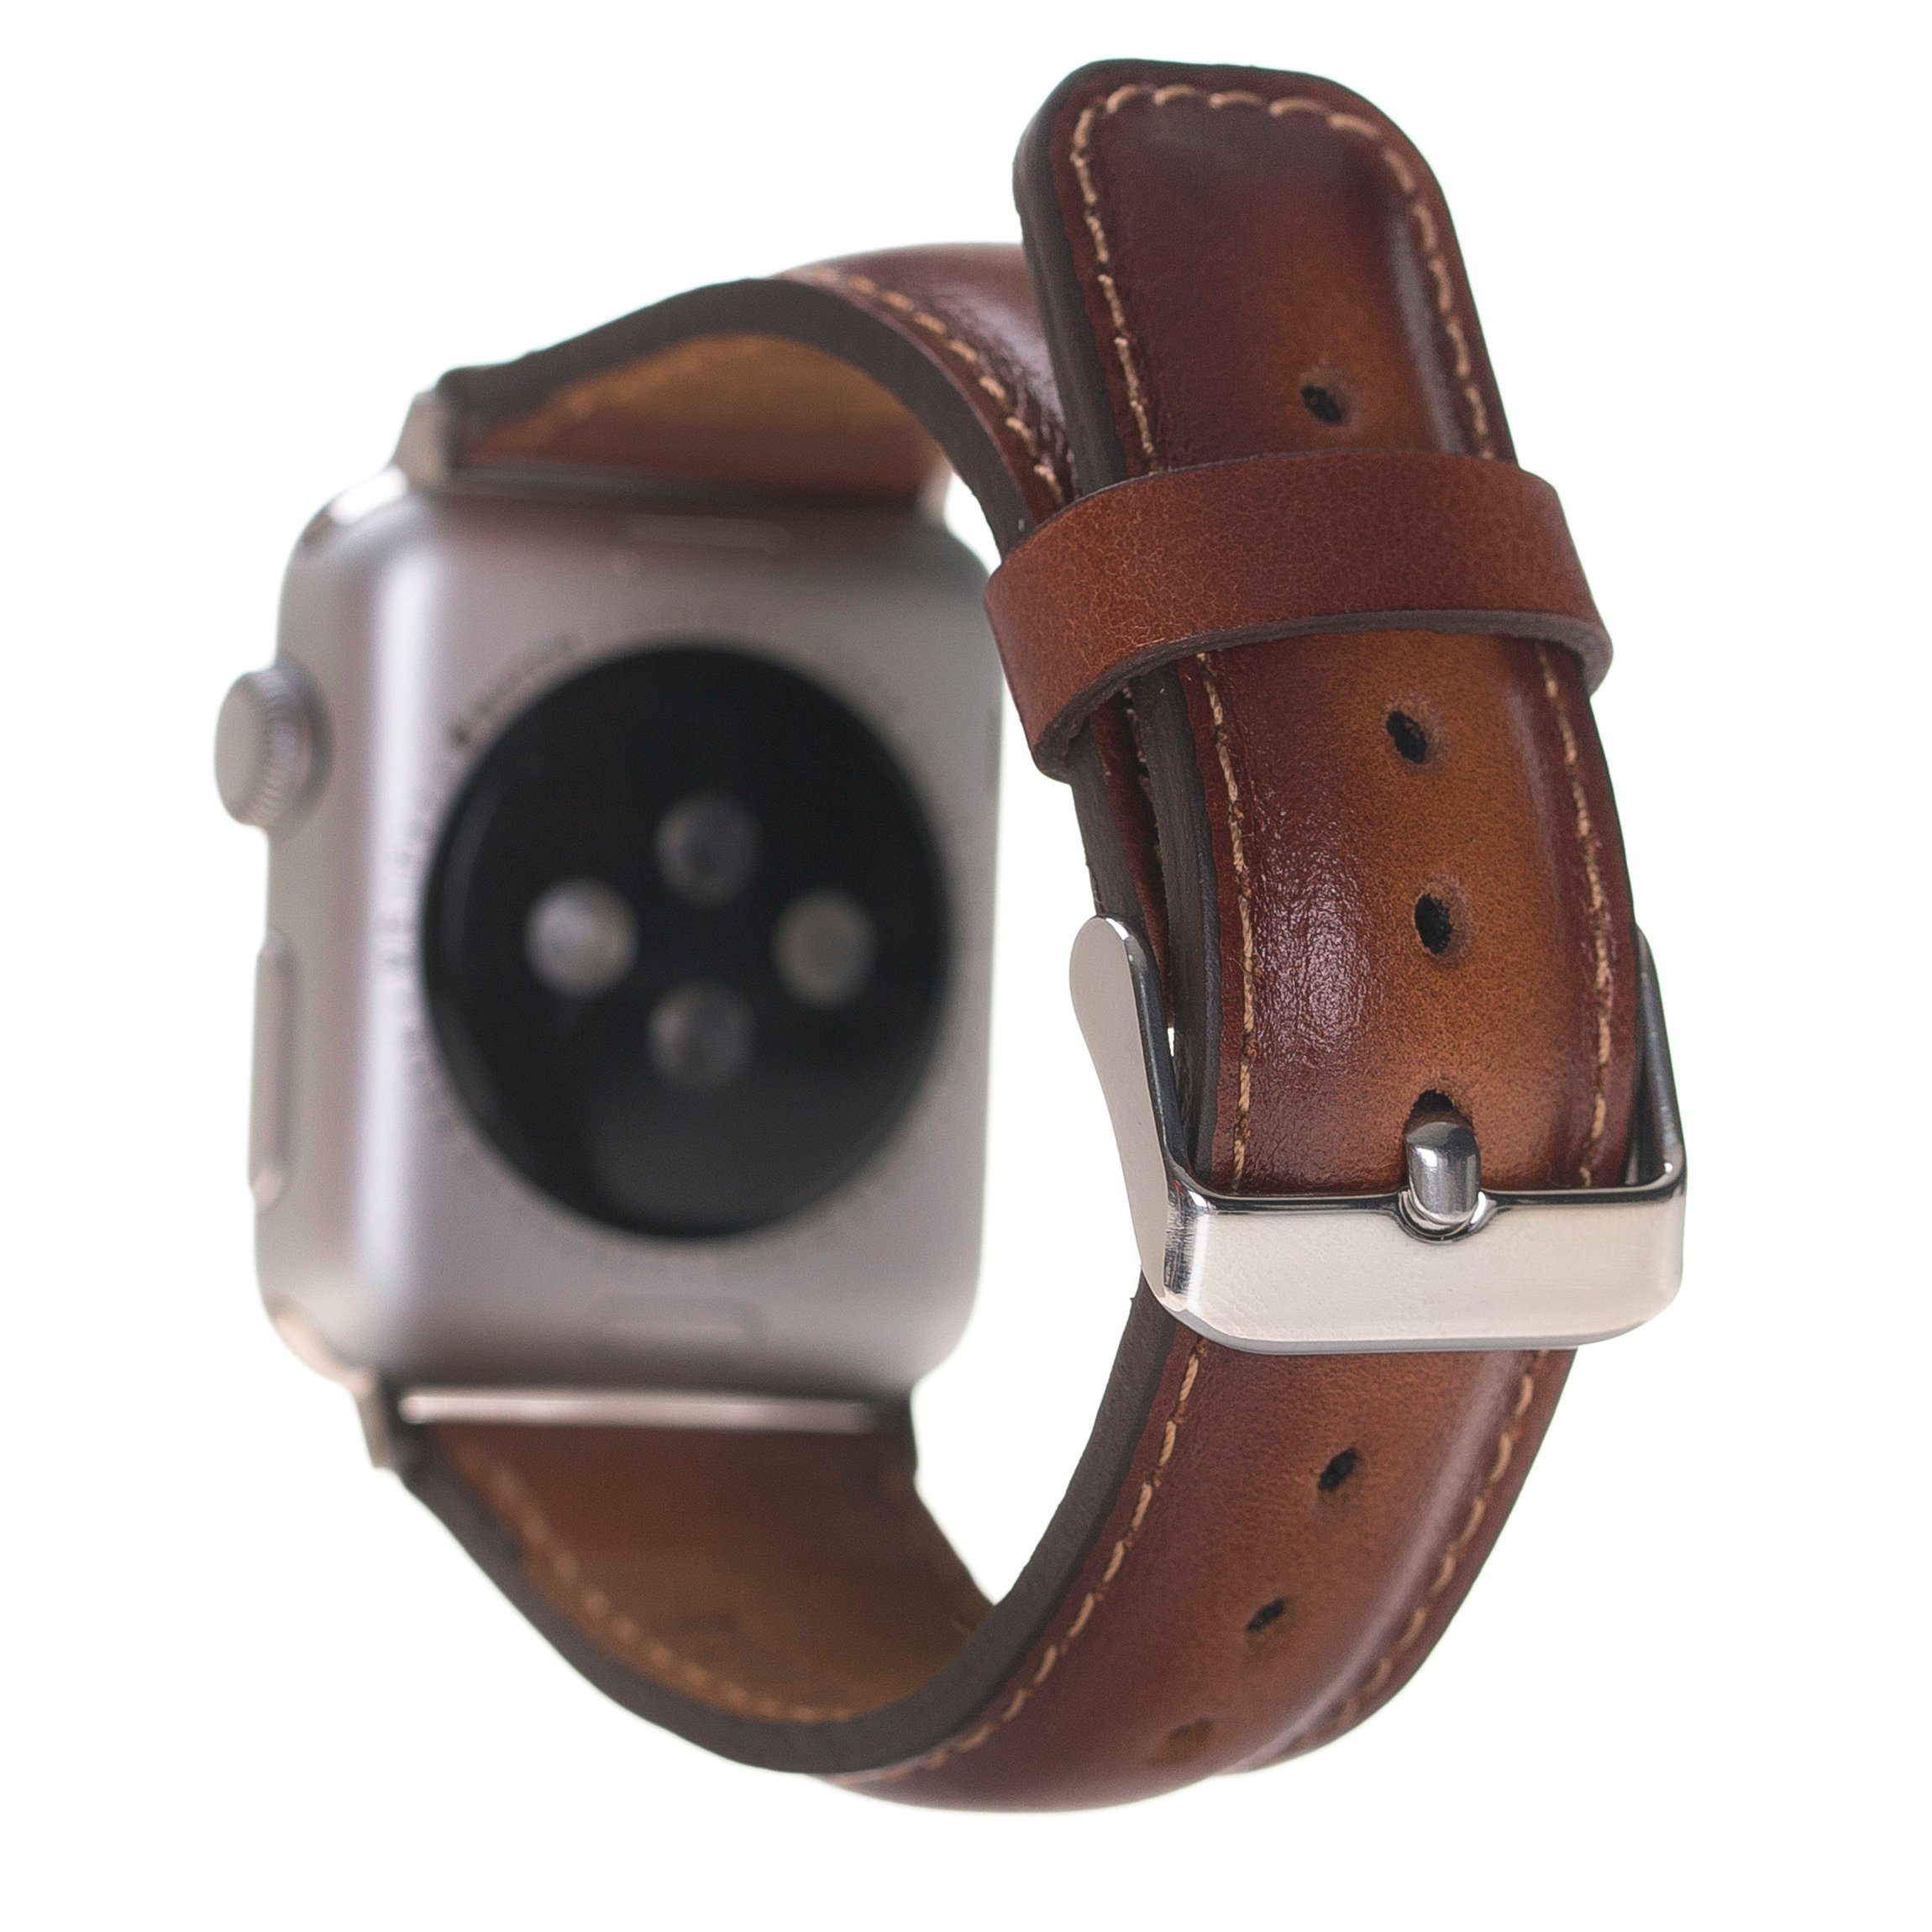 Series Apple Watch Braun Leather Ultra/9/8/7SE/6-1 Band Renna Uhrenarmband Ersatzarmband Echtleder für